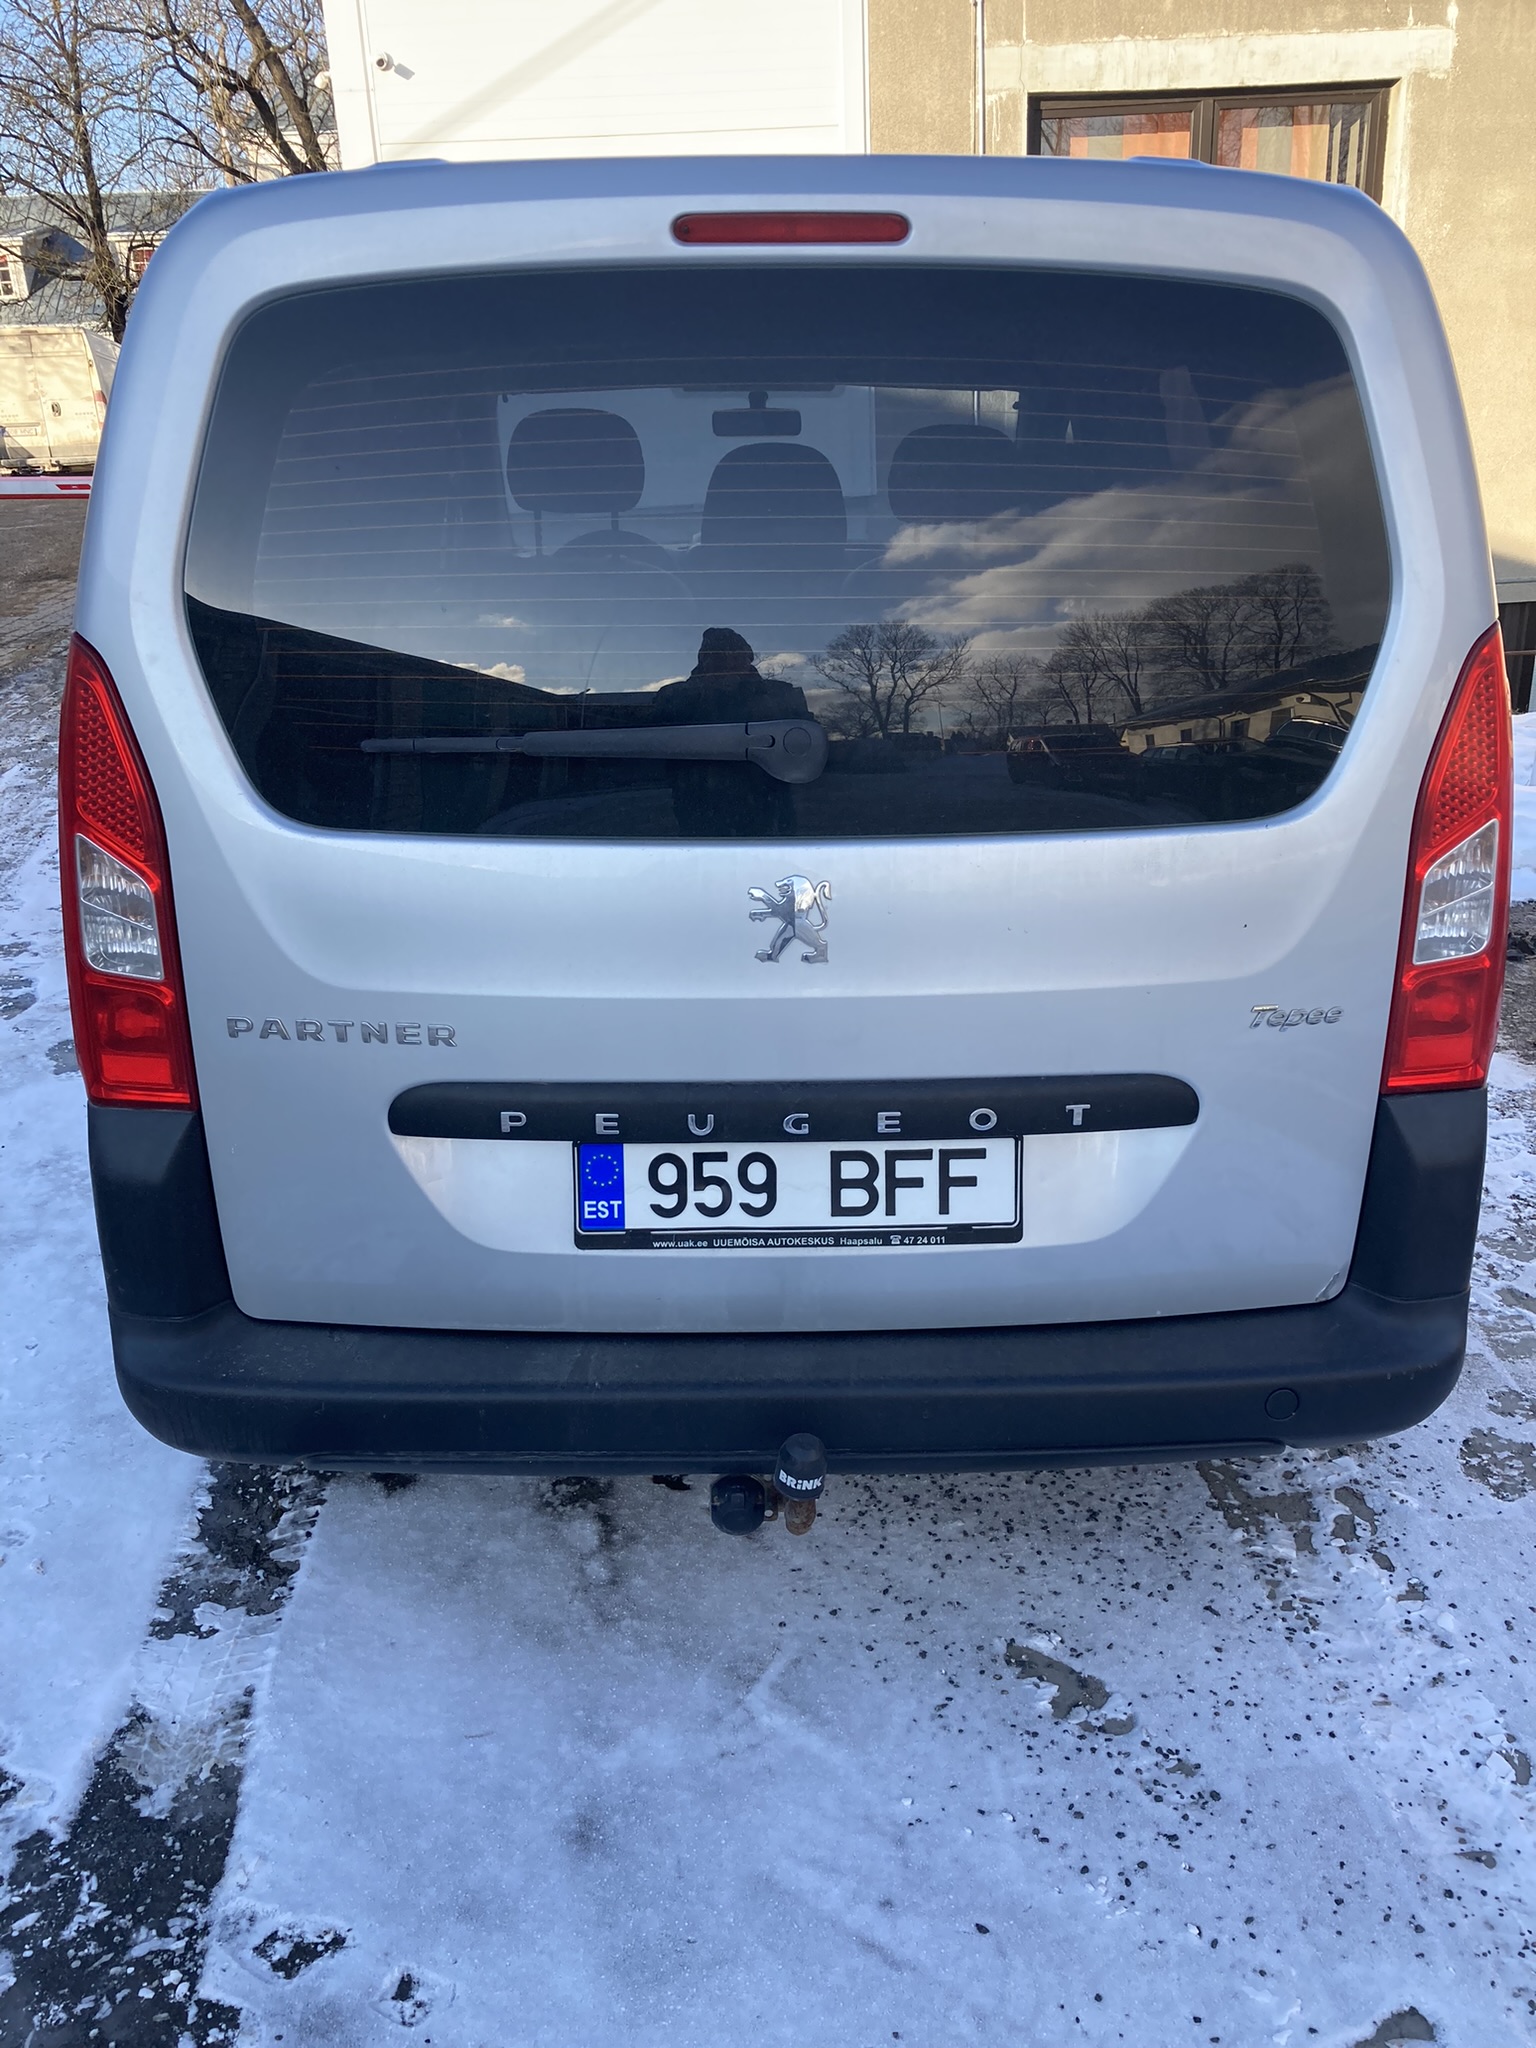 PeugeotPrtner-05